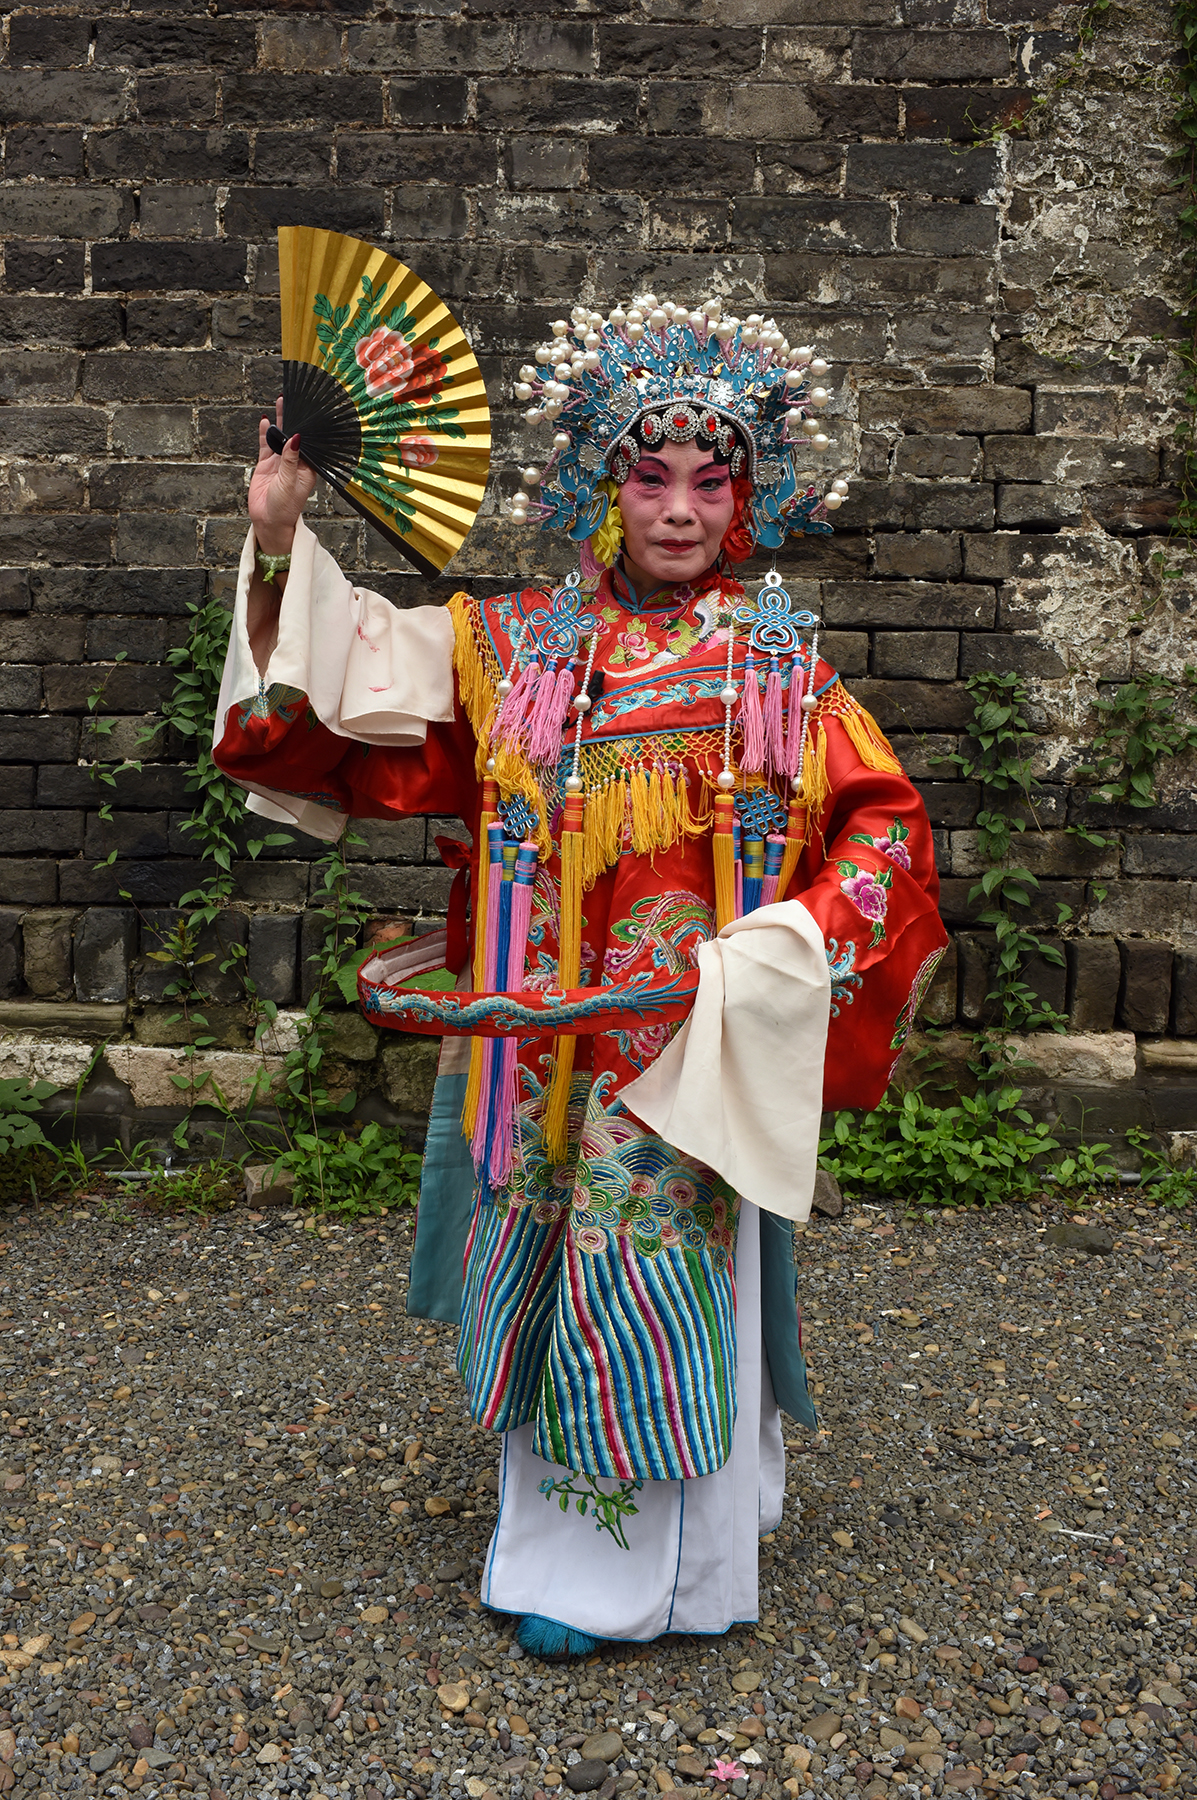  Han Ju Opera performer, Jingzhou 